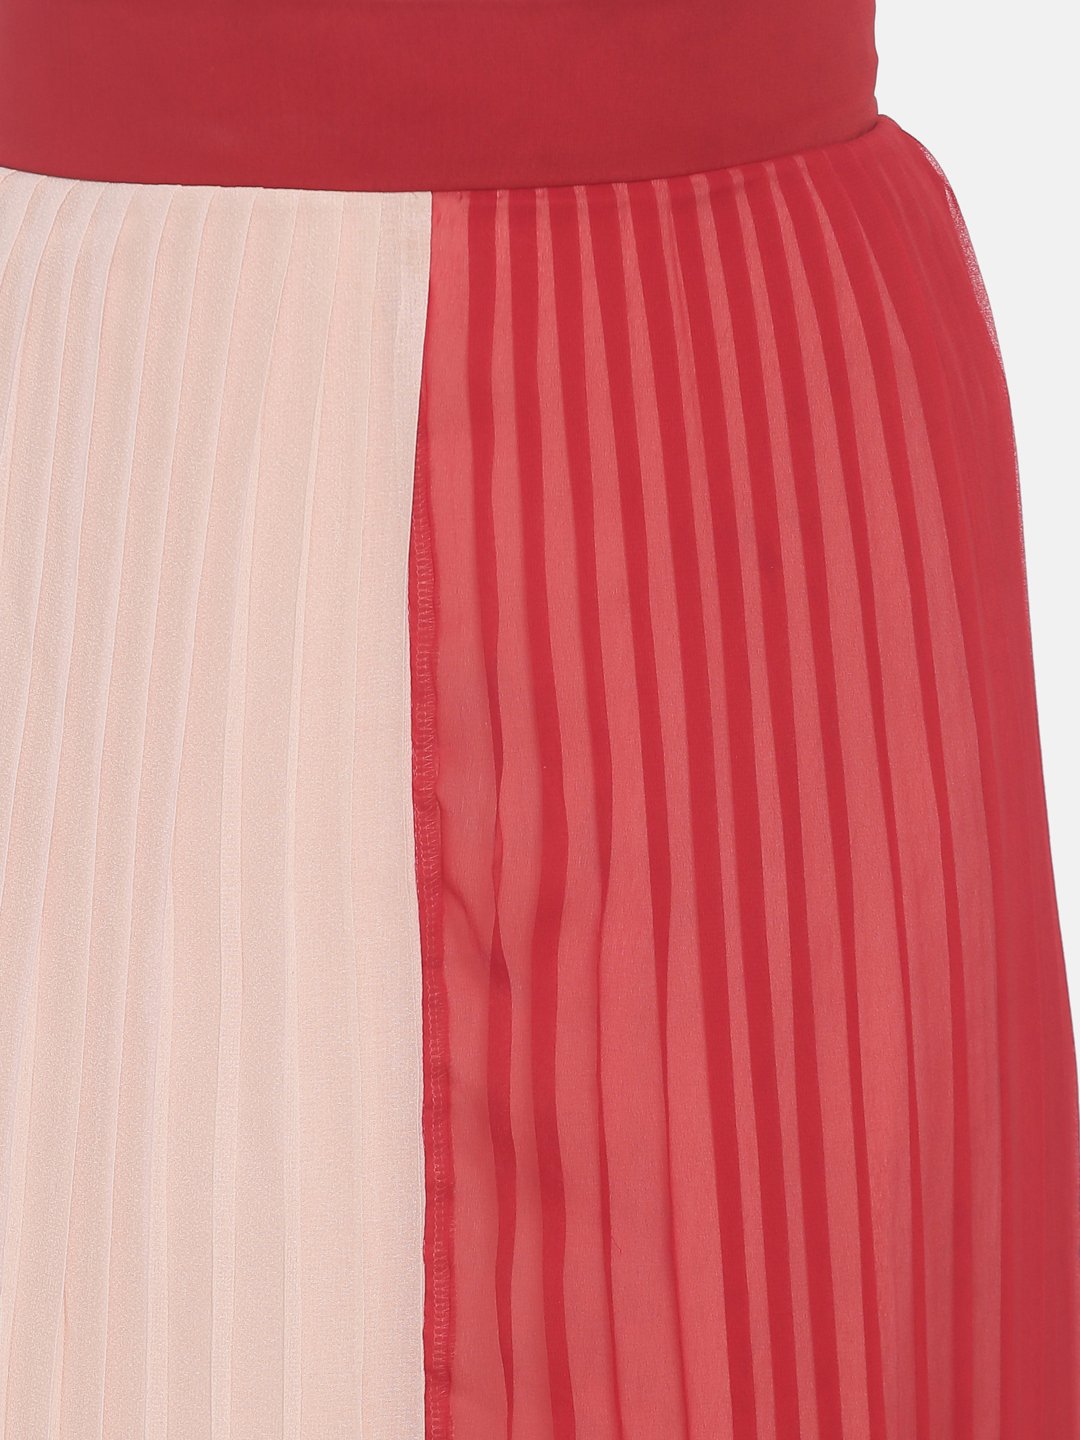 IS.U Pink Color Block Pleated Skirt